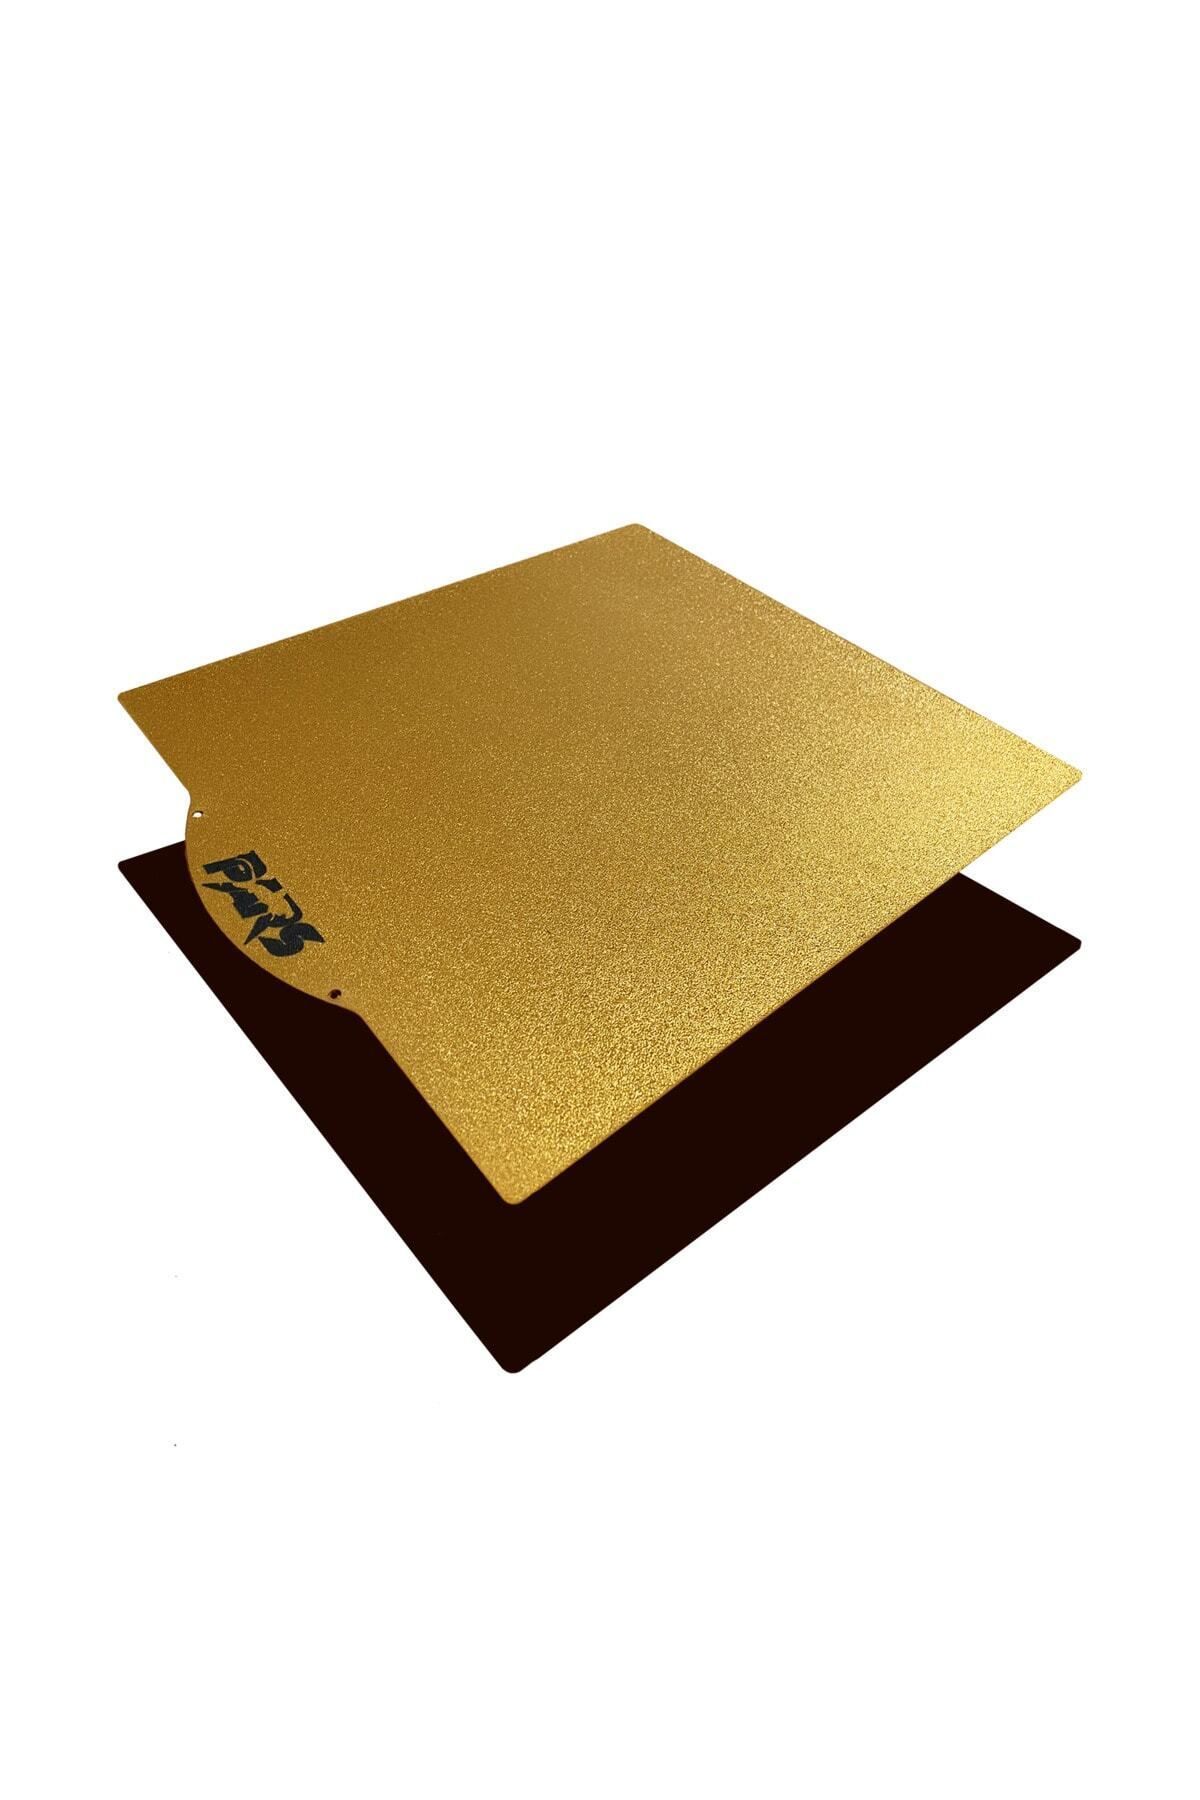 Pars 470x470 Mm Gold Pei Kaplı Özel Yay Çeliği Tabla Magnetli